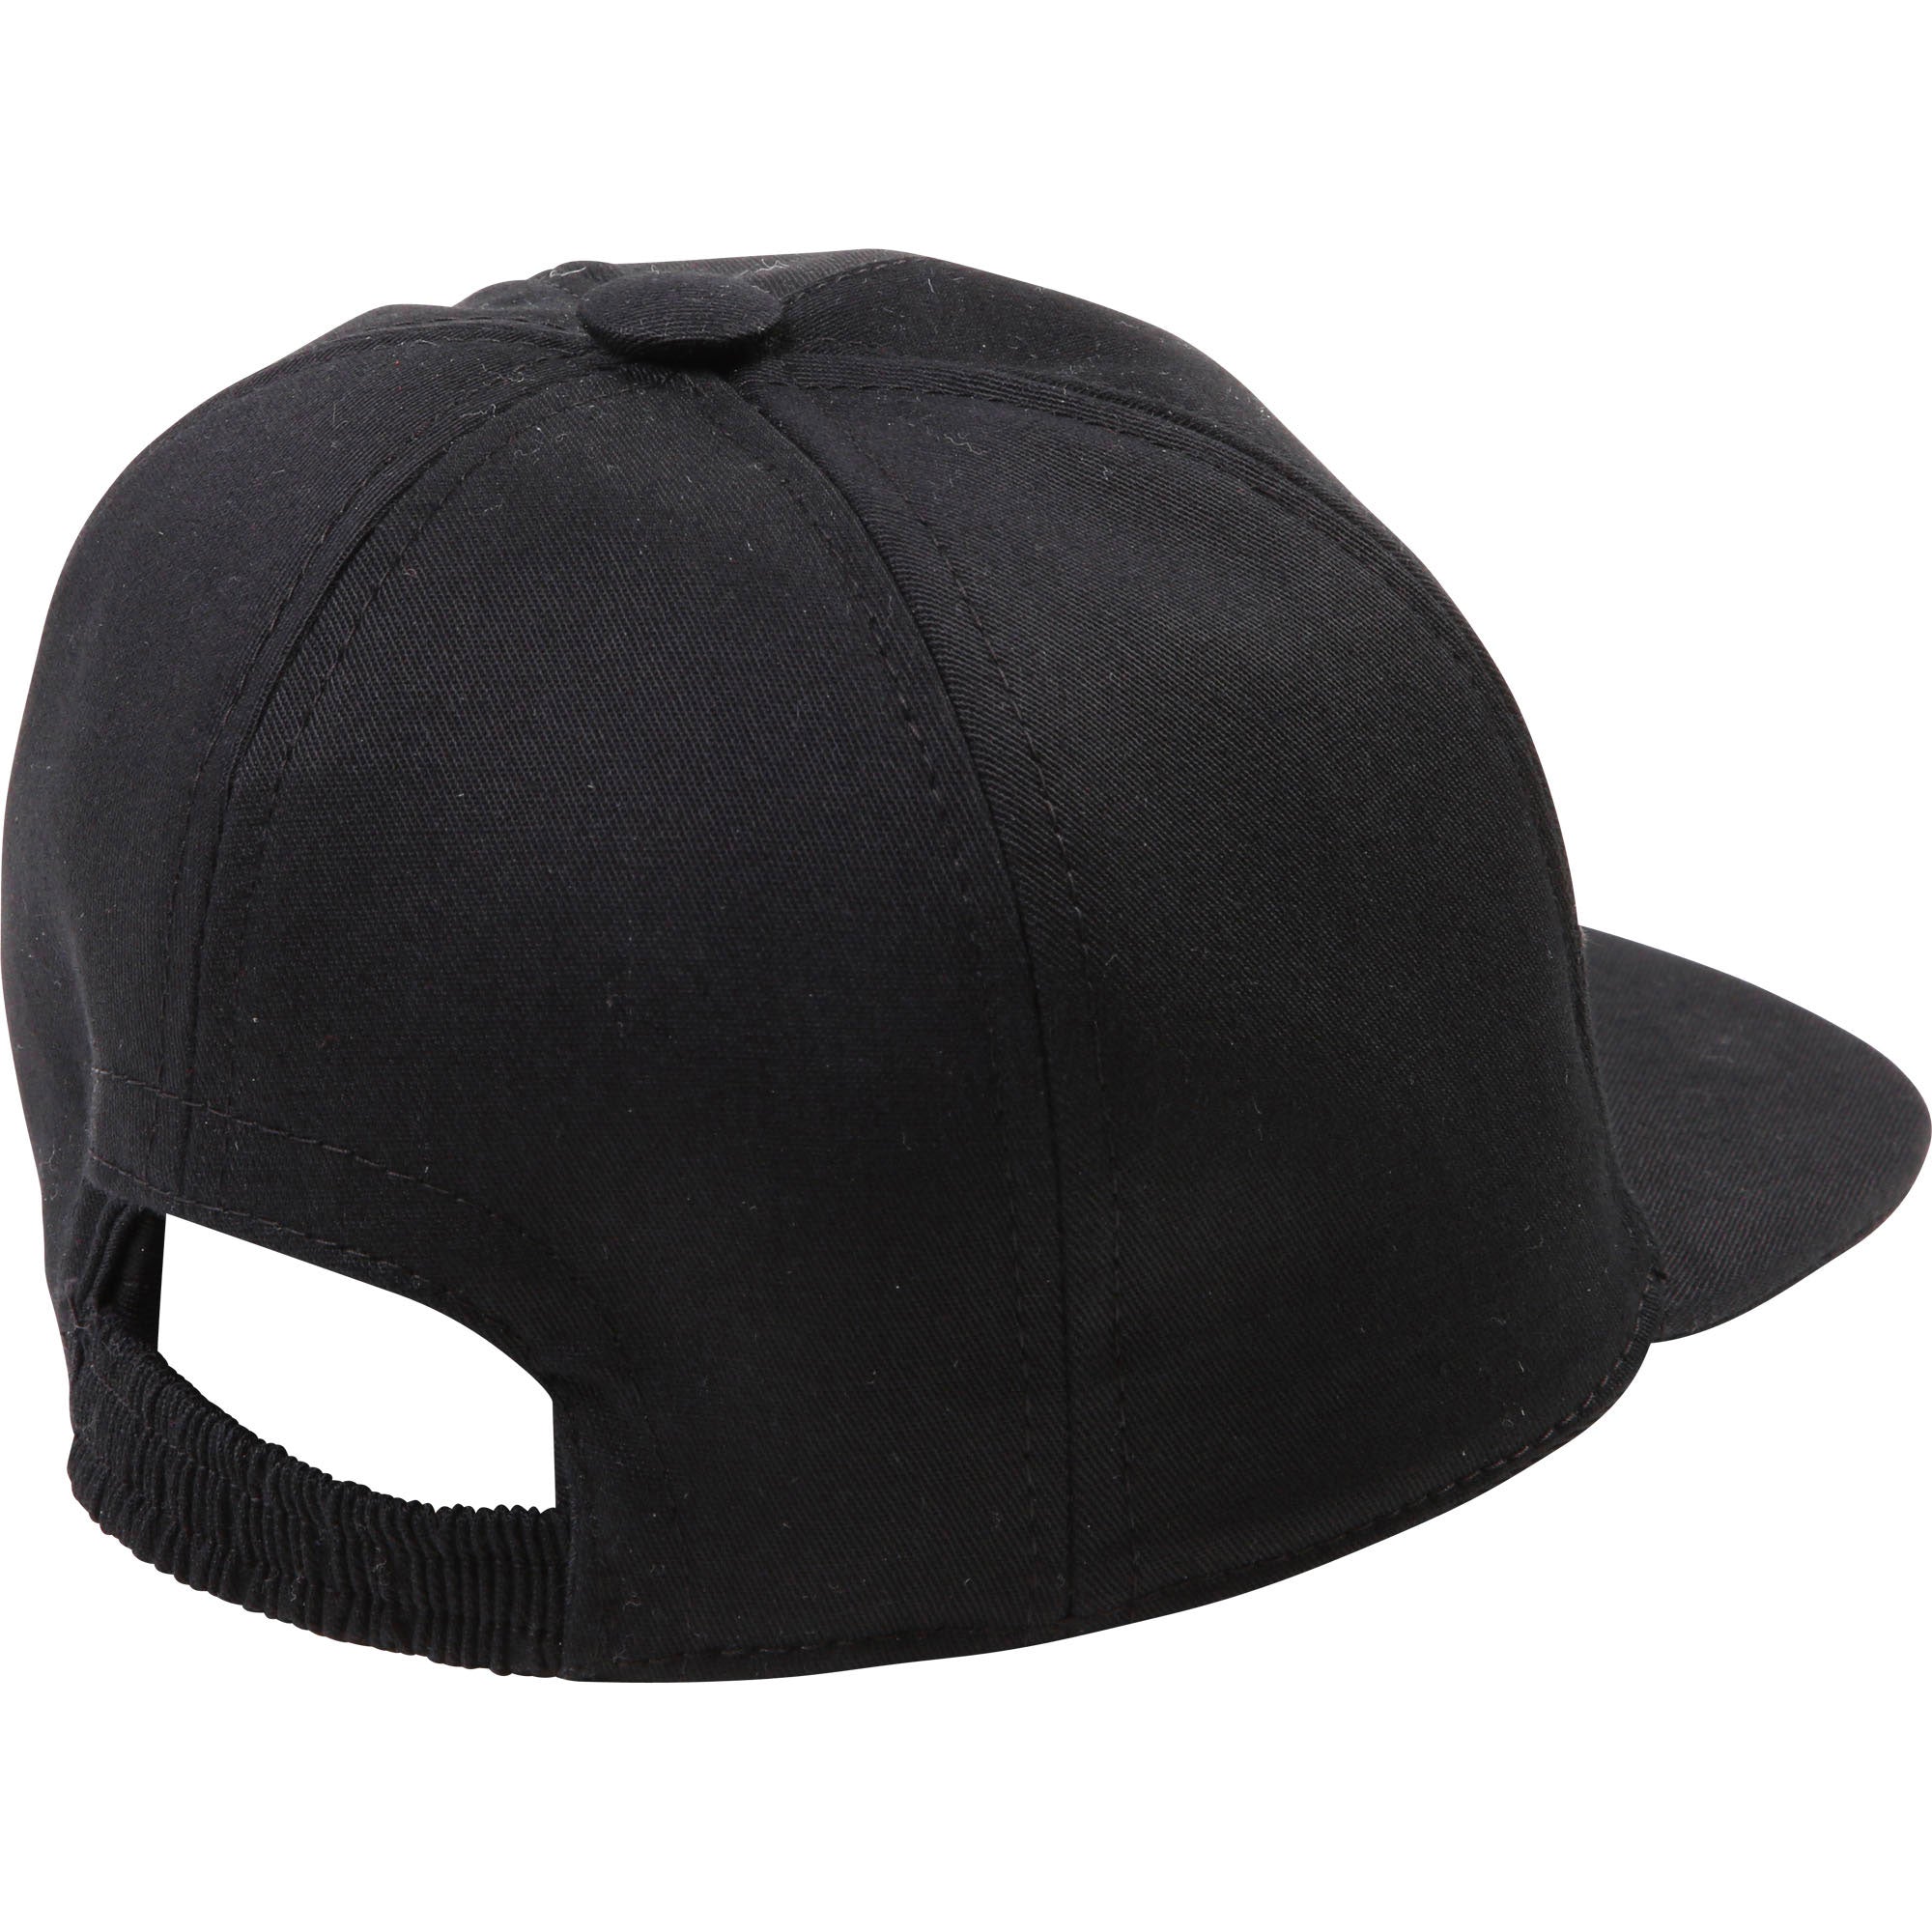 Boys Black Logo Hat